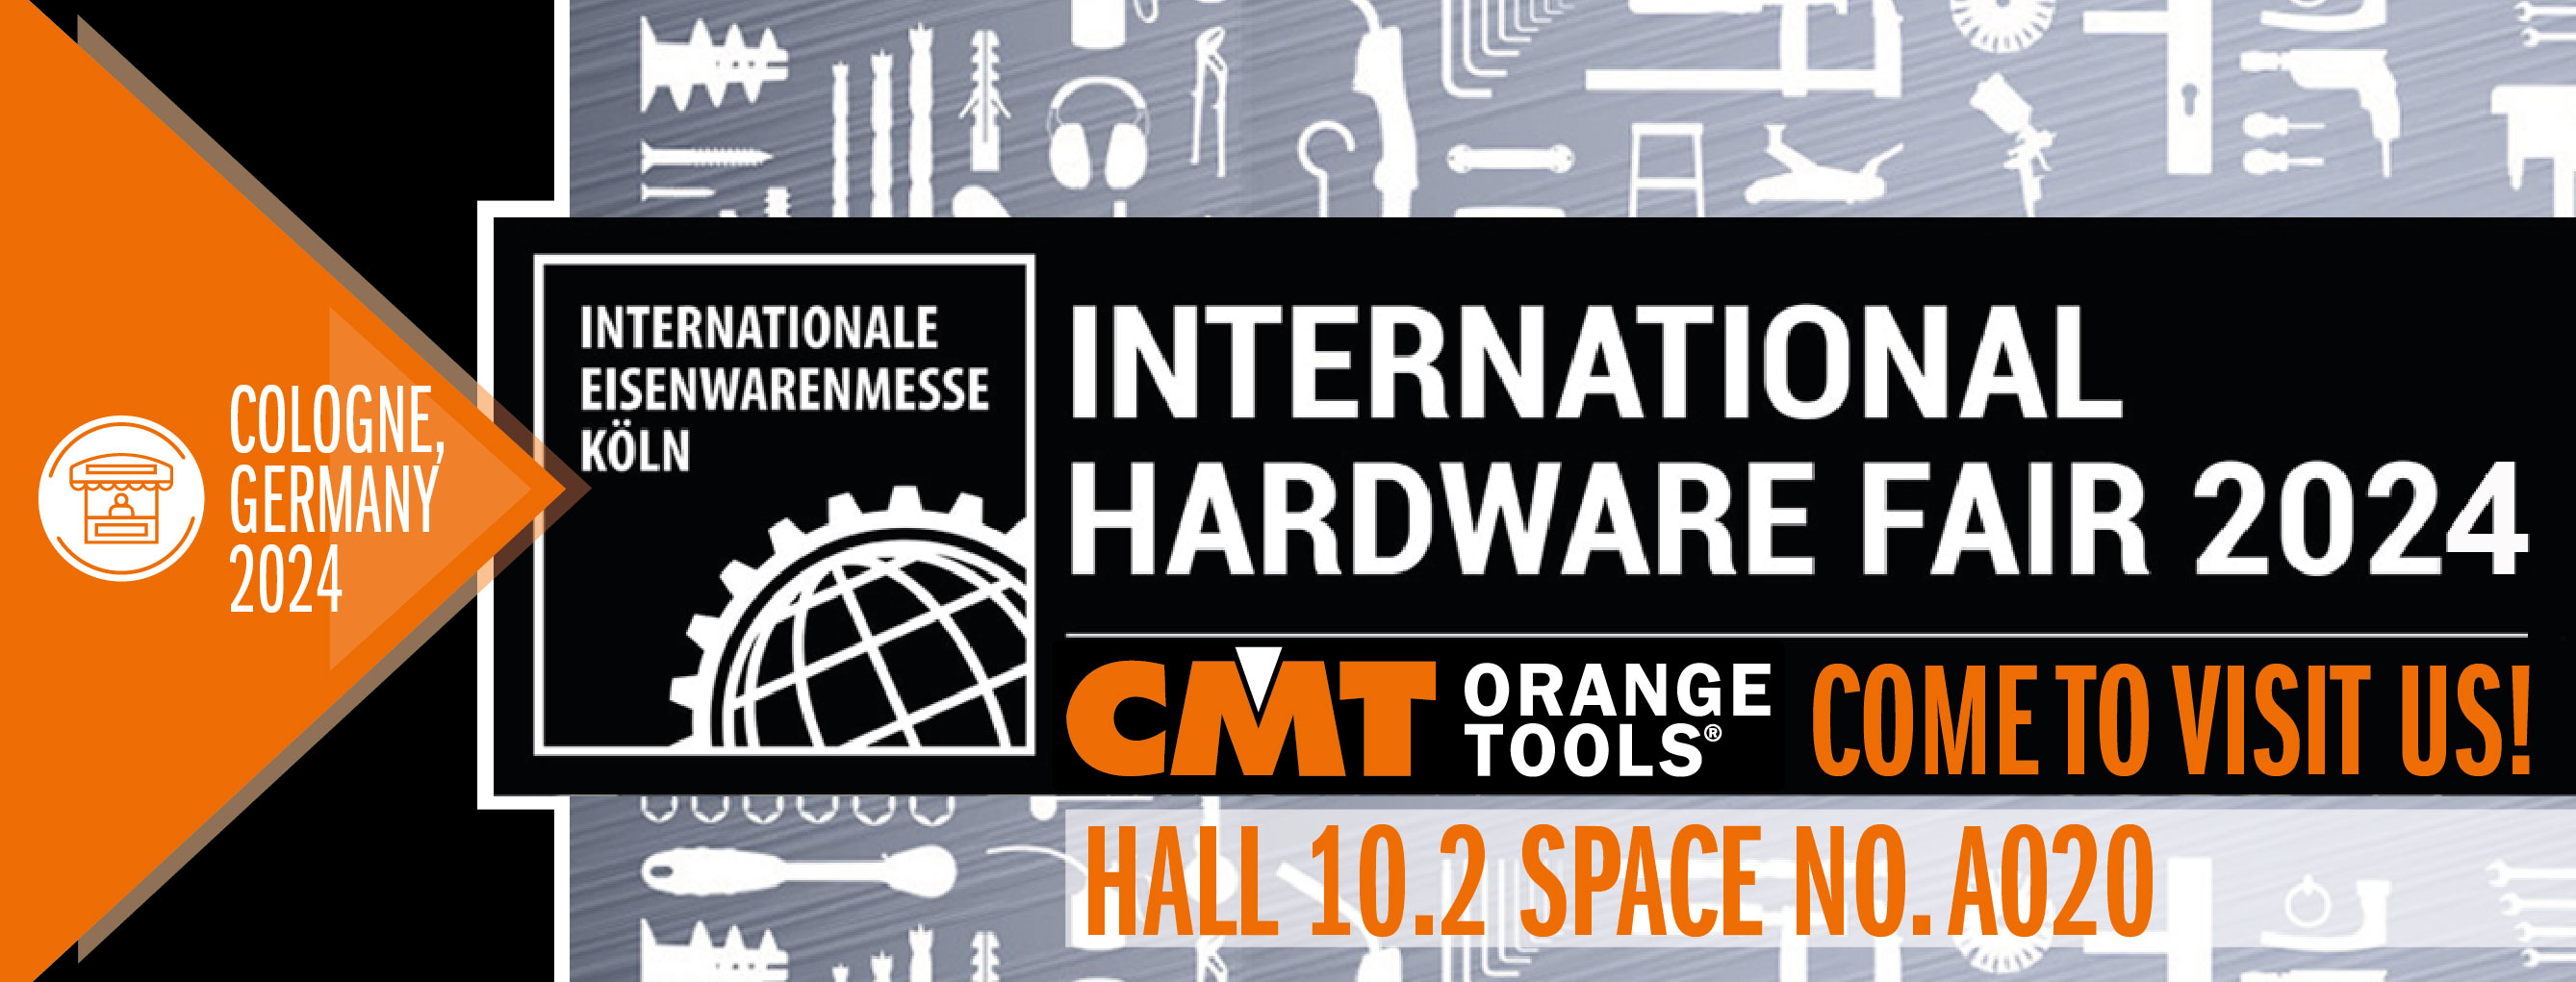 Eisenwarenmesse 3-6 Marzo 2024: entra gratis con CMT Orange Tools